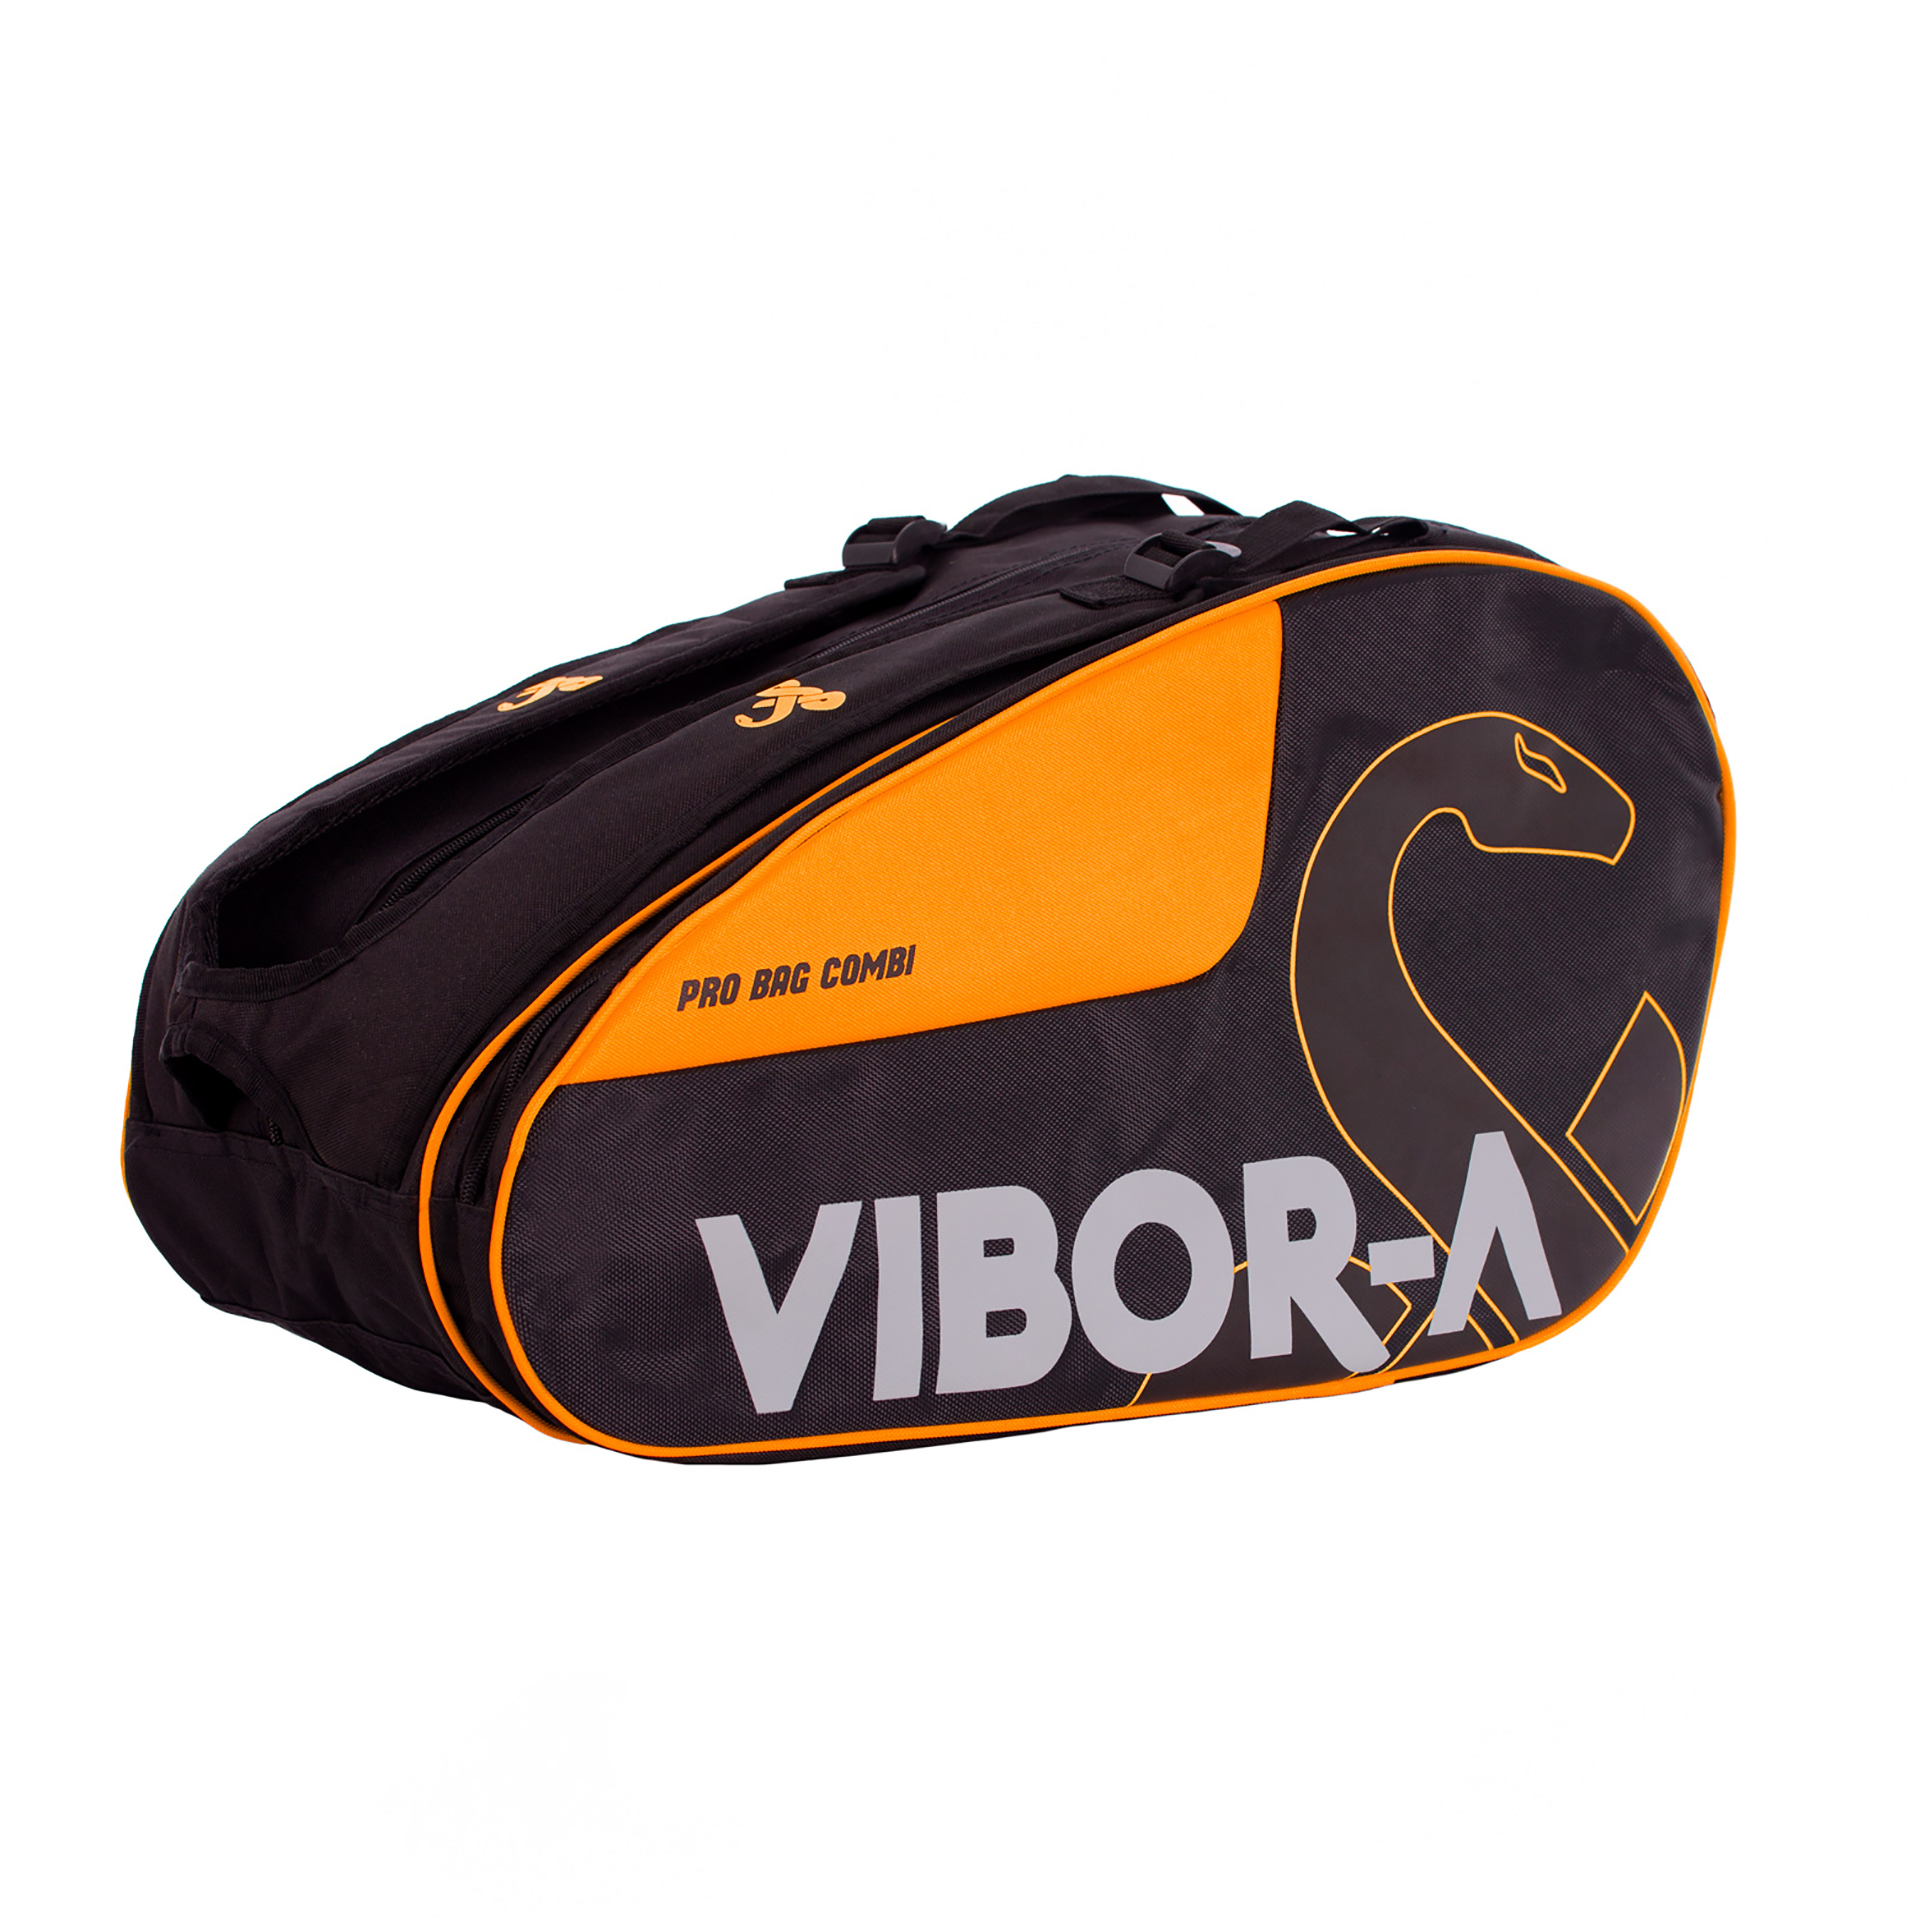 Paletero Vibor-A Pro Bag Combi